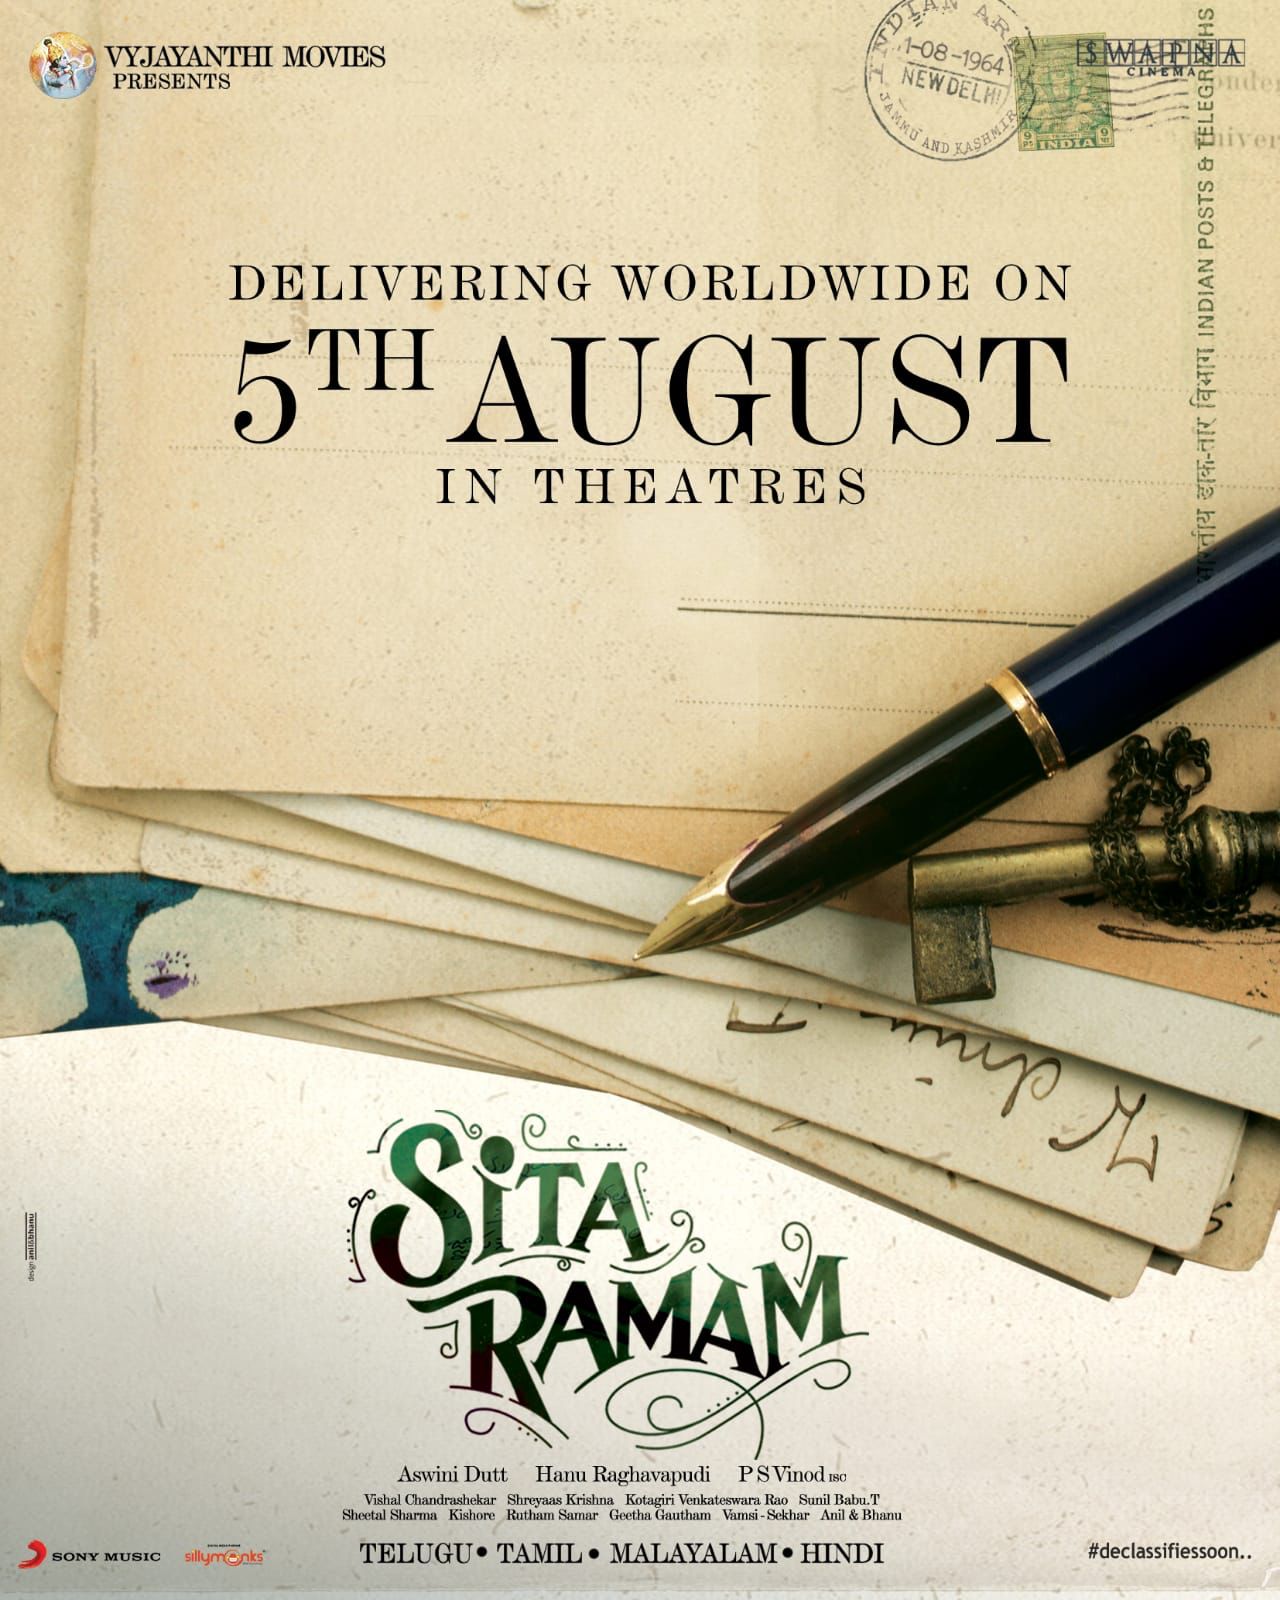 Dulquer Salmaan Rashmika Mandanna Sita Ramam is Releasing Worldwide In Theaters On 5th August